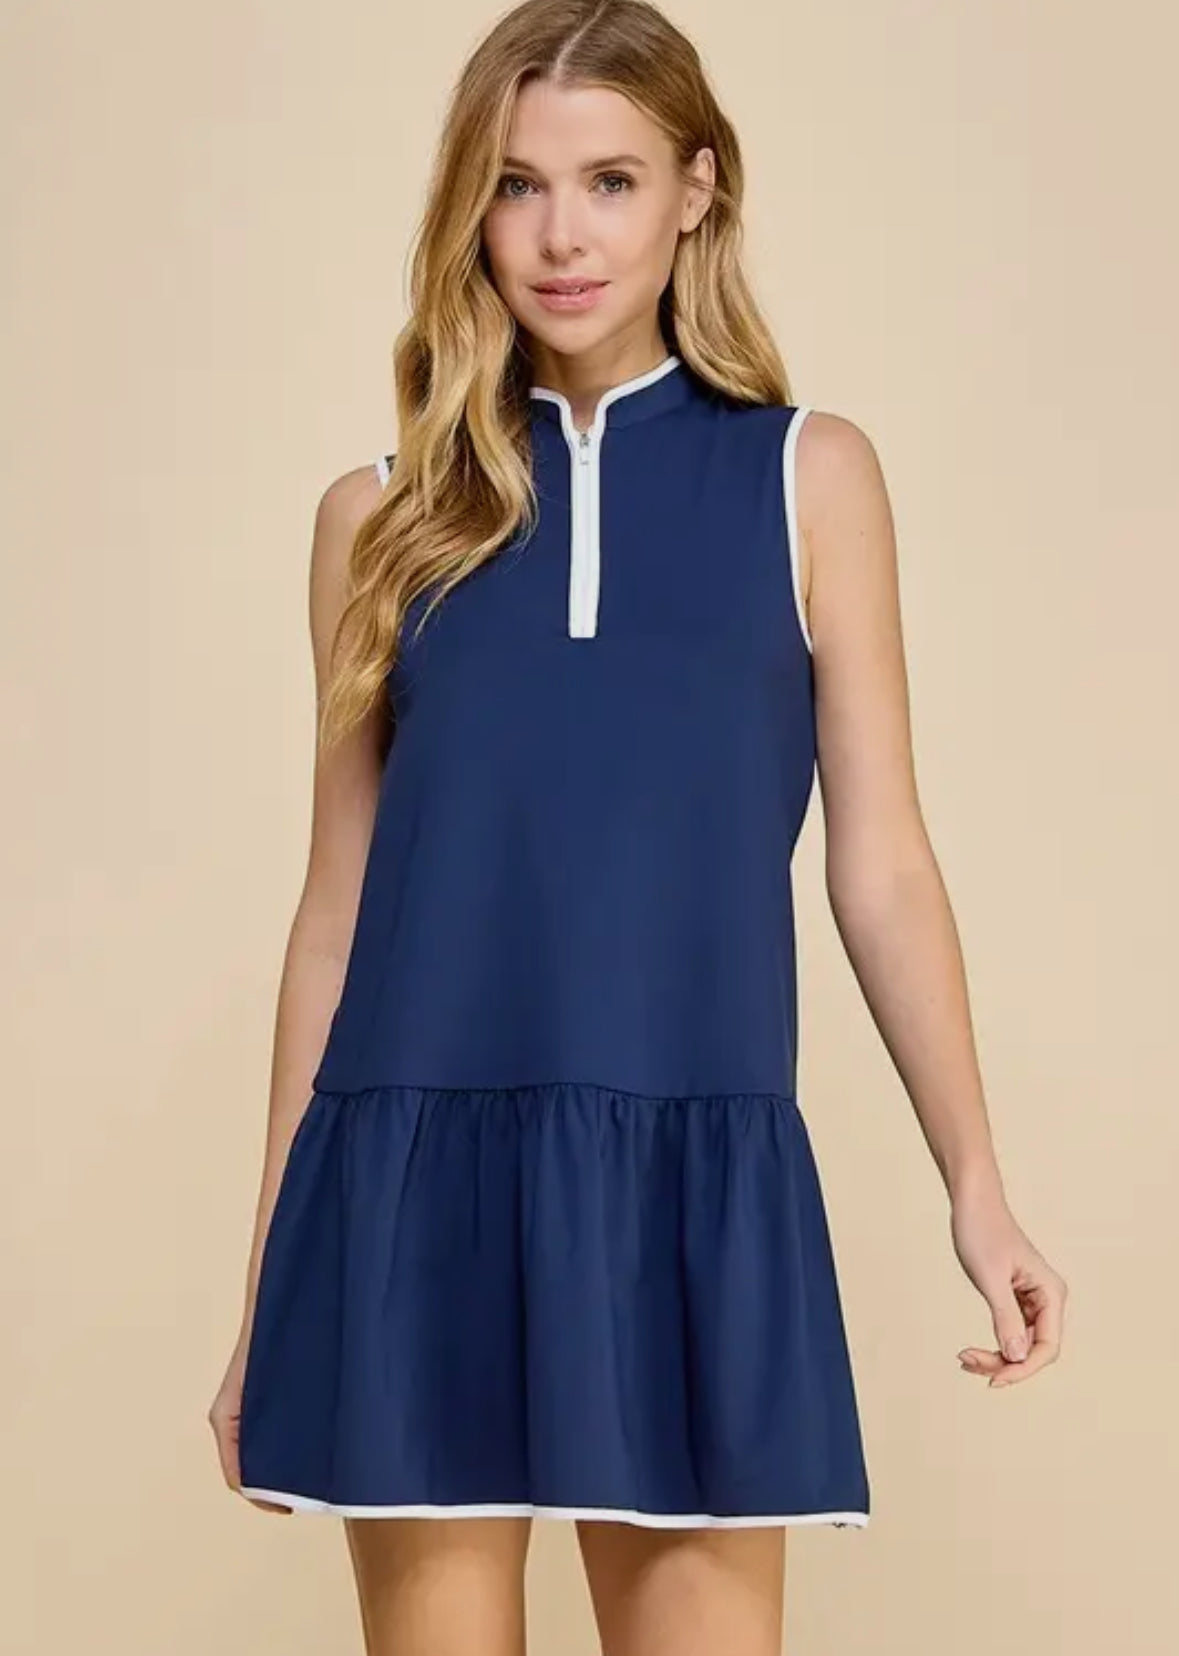 Navy Blue Athletic Dress